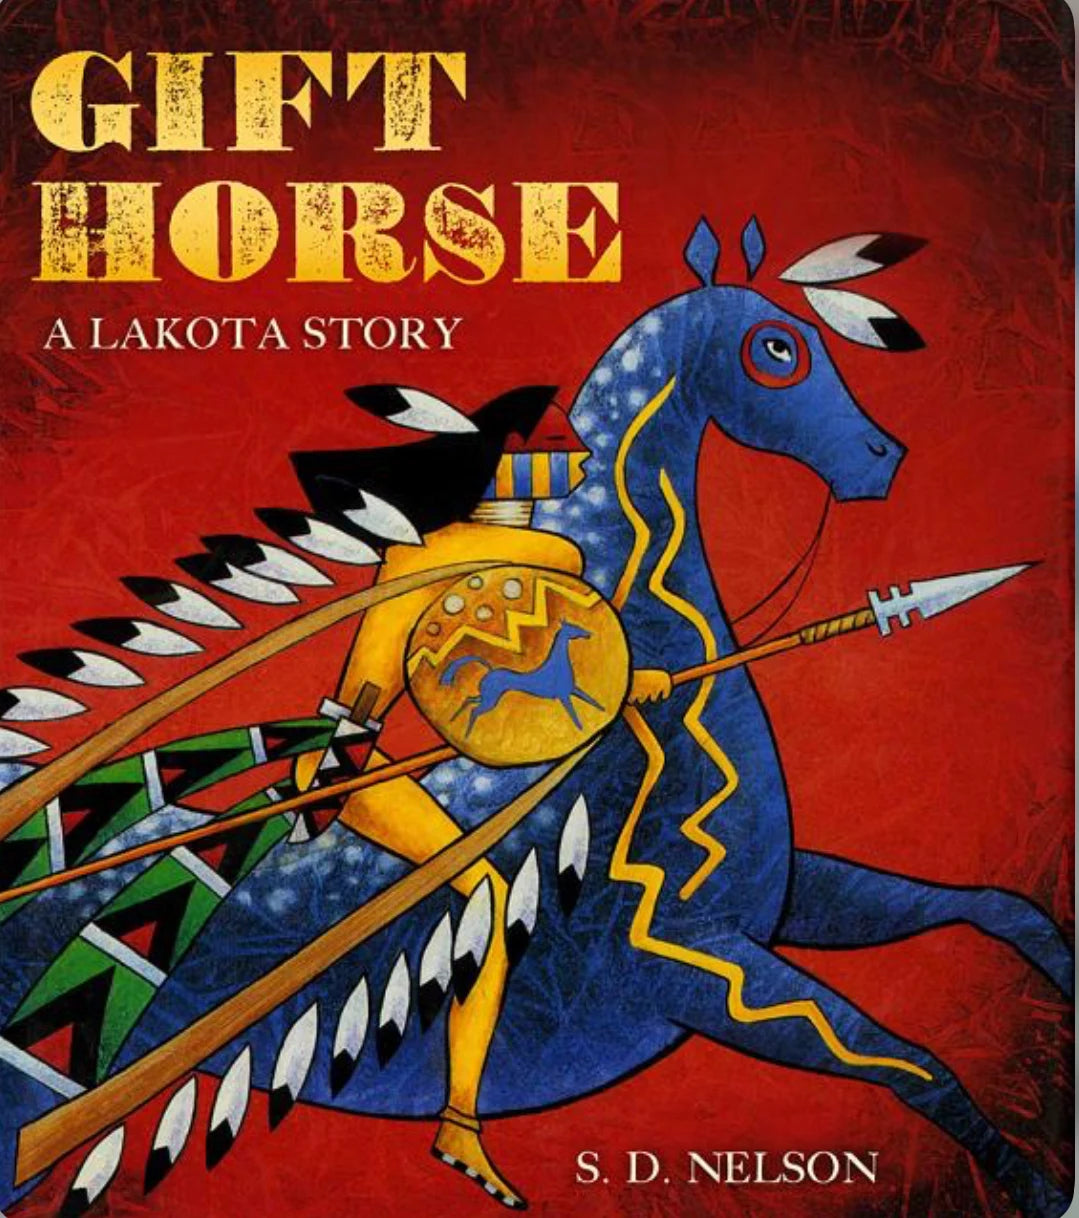 Lakota Culture - Gift horse: A Lakota Story by SD Nelson - Alder & Alouette